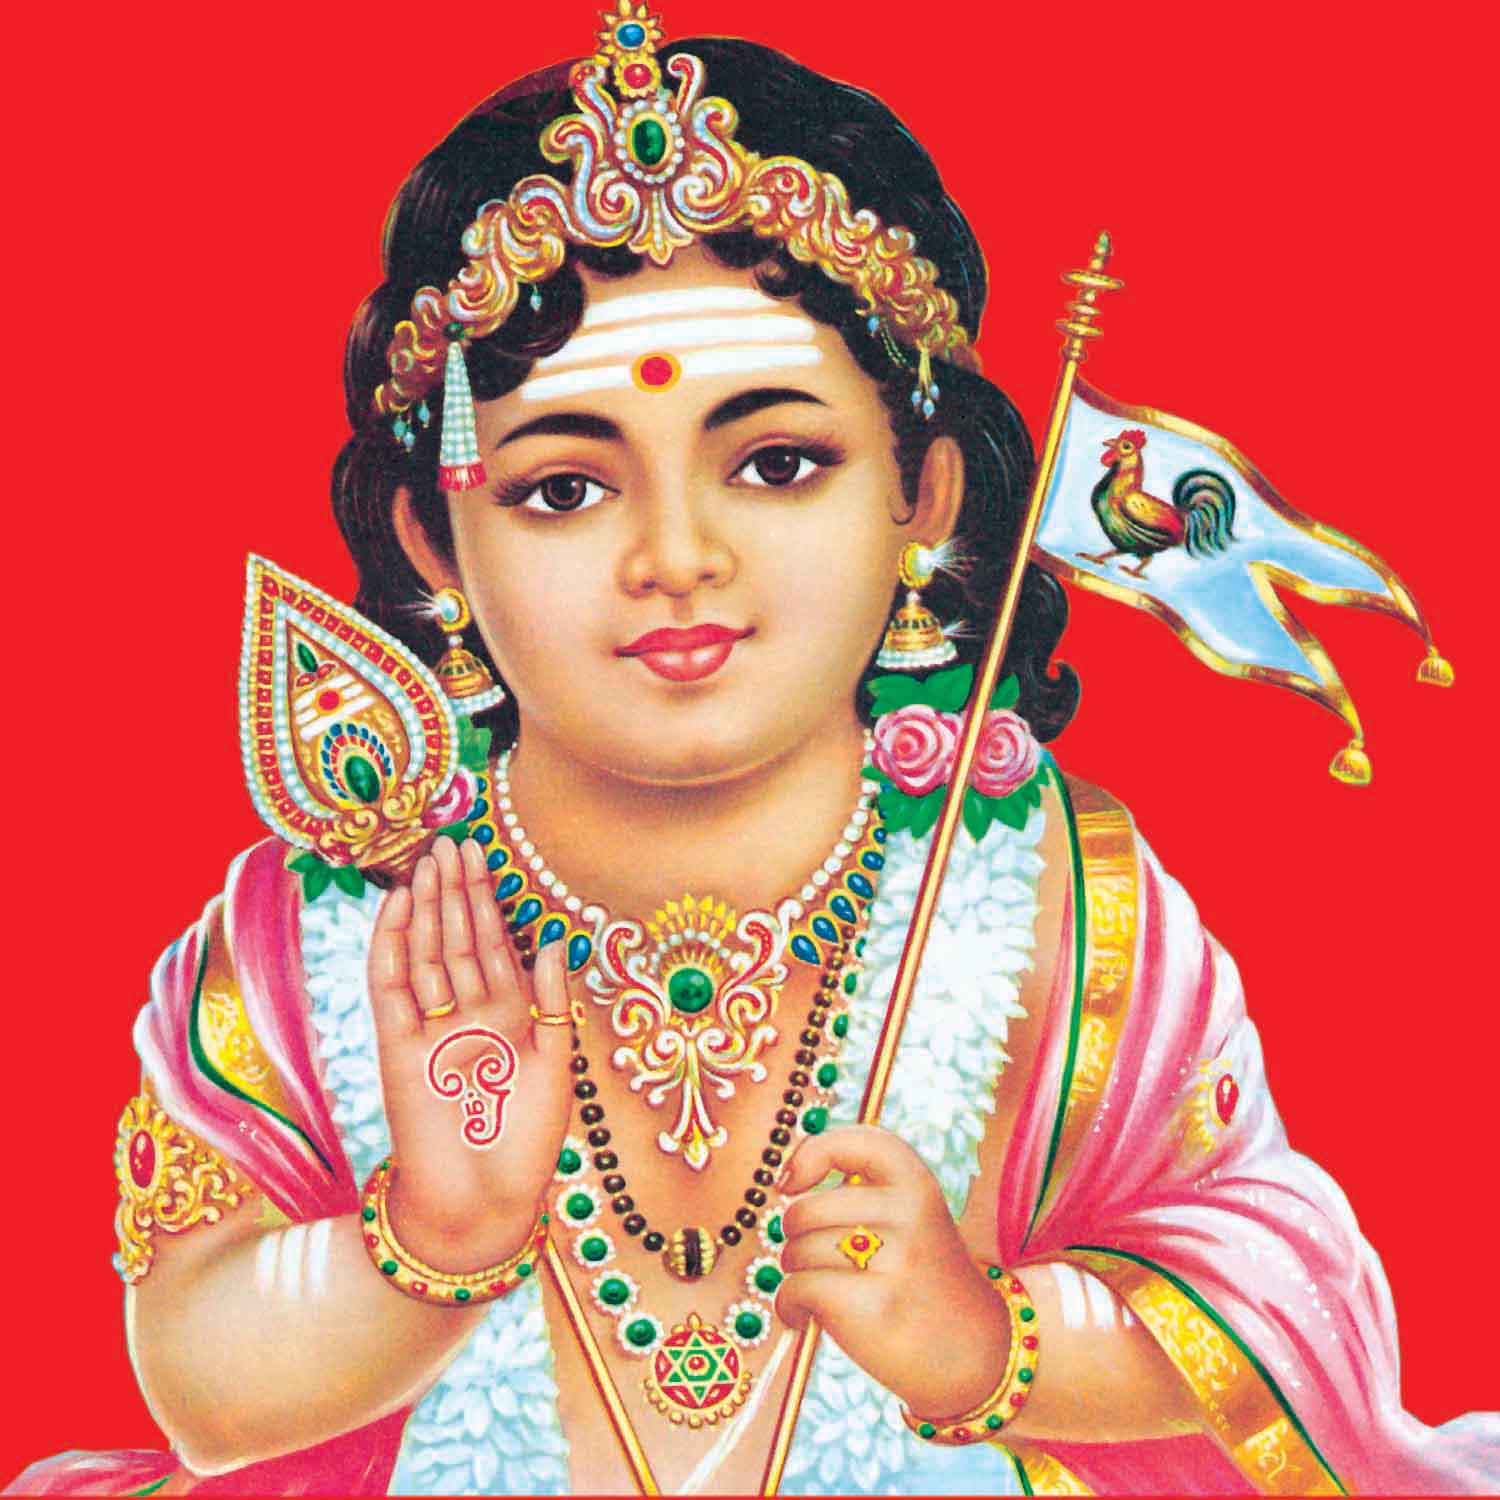 Lord Murugan Lord Subramanya Swamy HD wallpapers Images Pictures photos  Gallery Free Download  Hindu God Image  hindugodimagesblogspotin